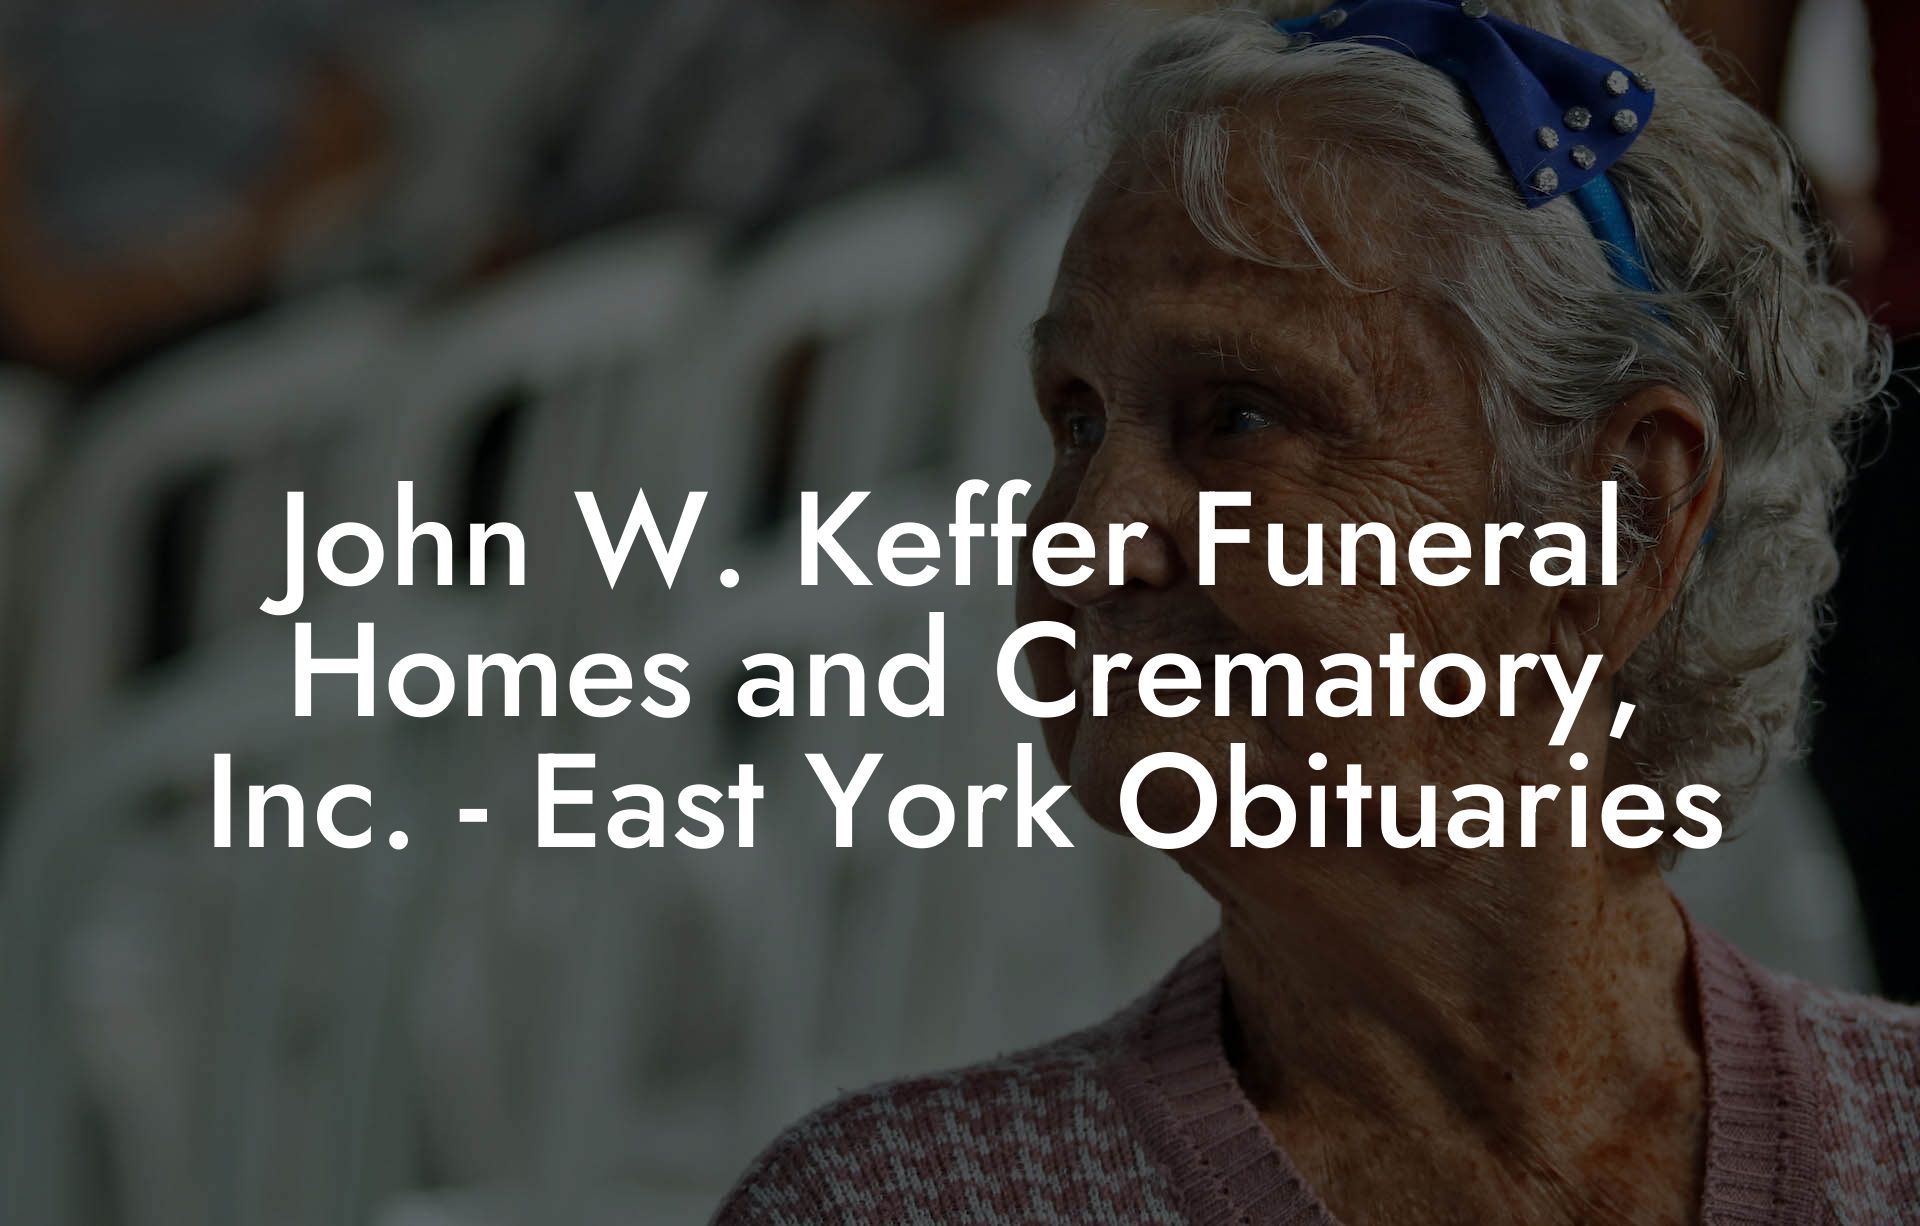 John W. Keffer Funeral Homes and Crematory, Inc. - East York Obituaries